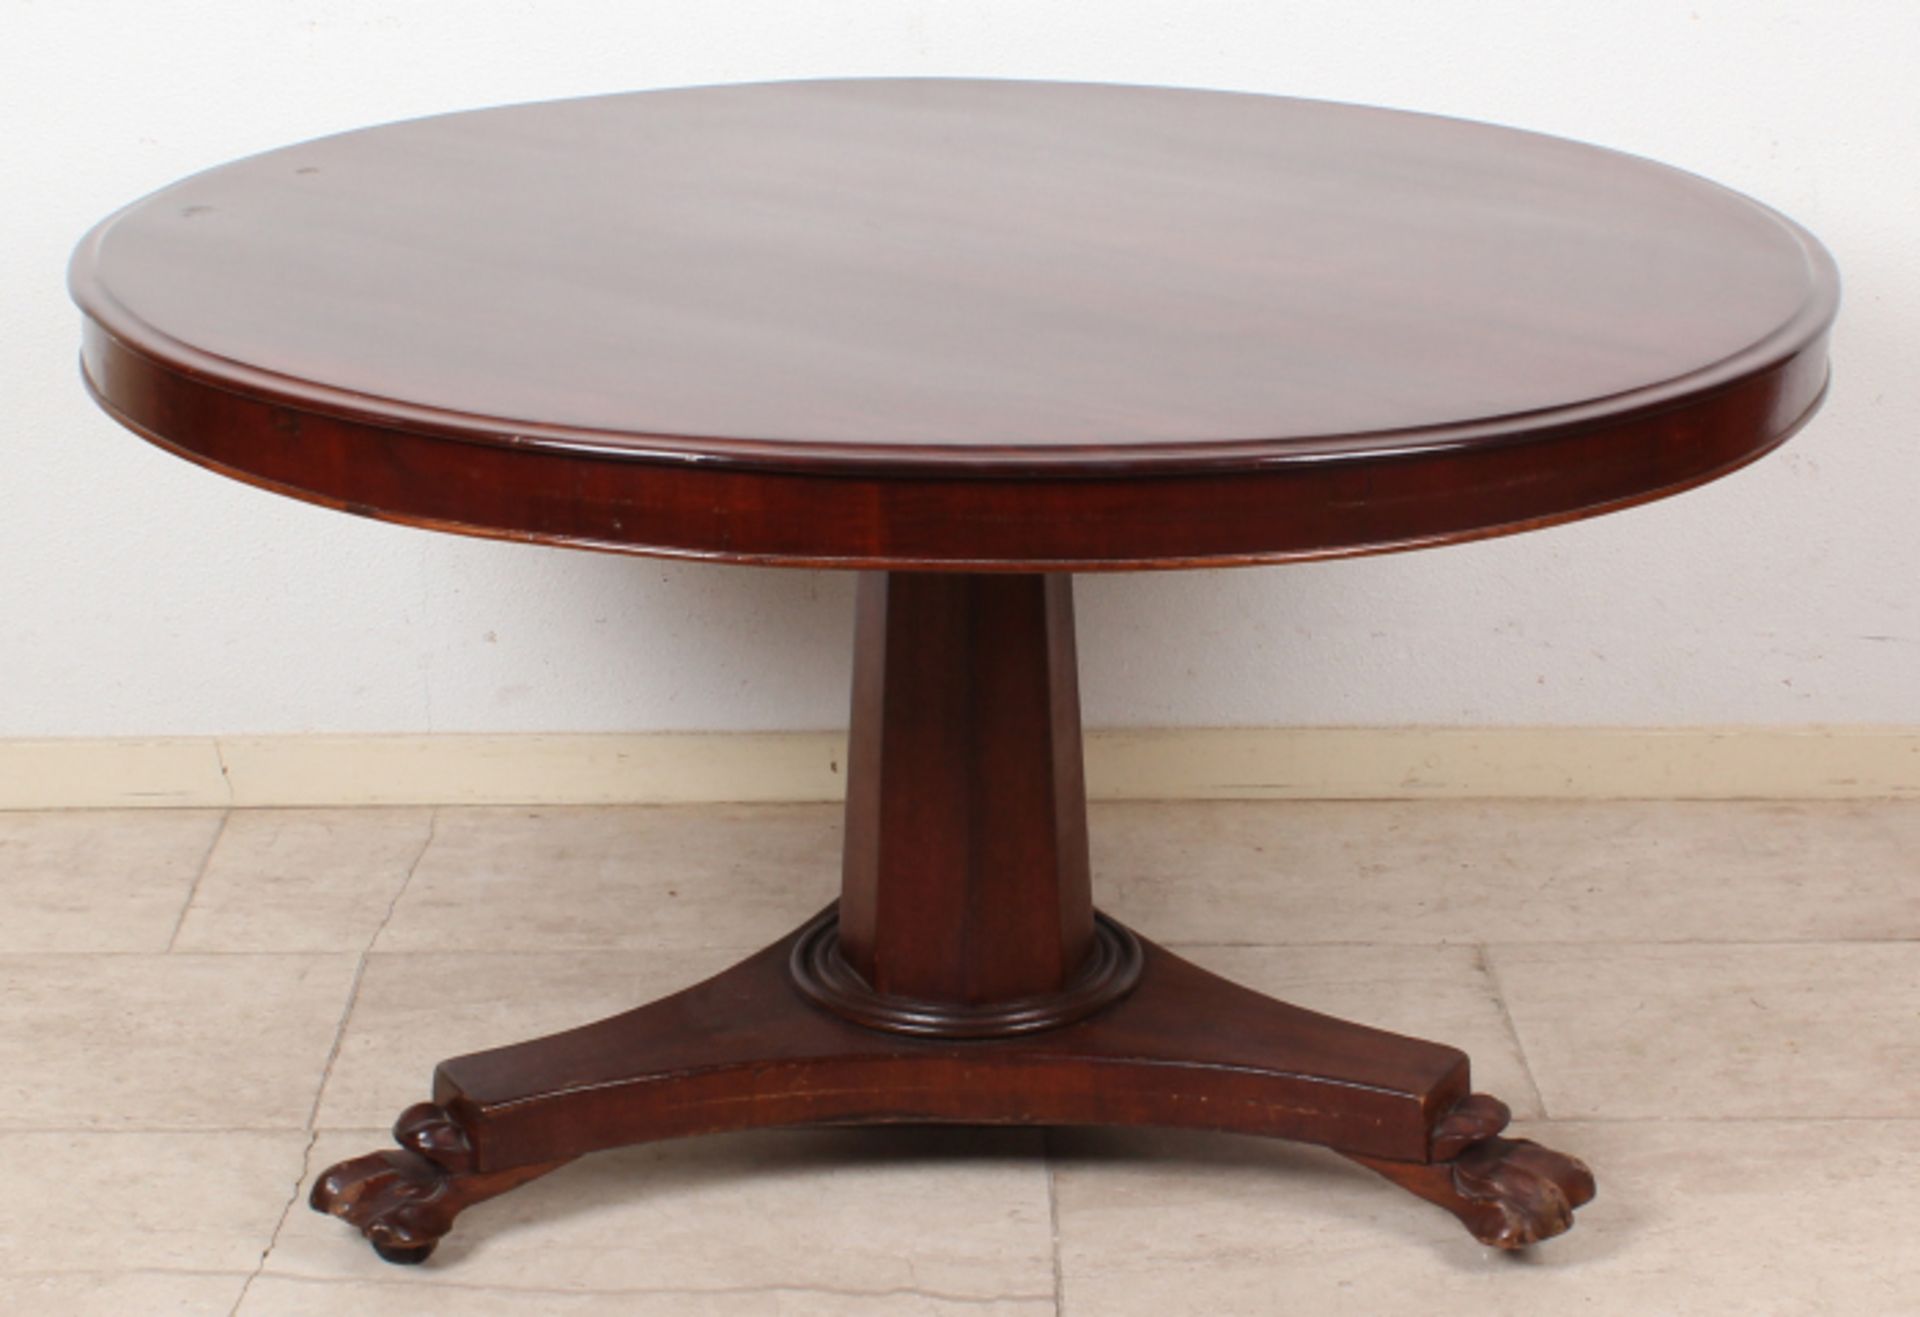 Nineteenth century mahogany Empire table with claw feet, good condition 61x108cm Neunzehnten